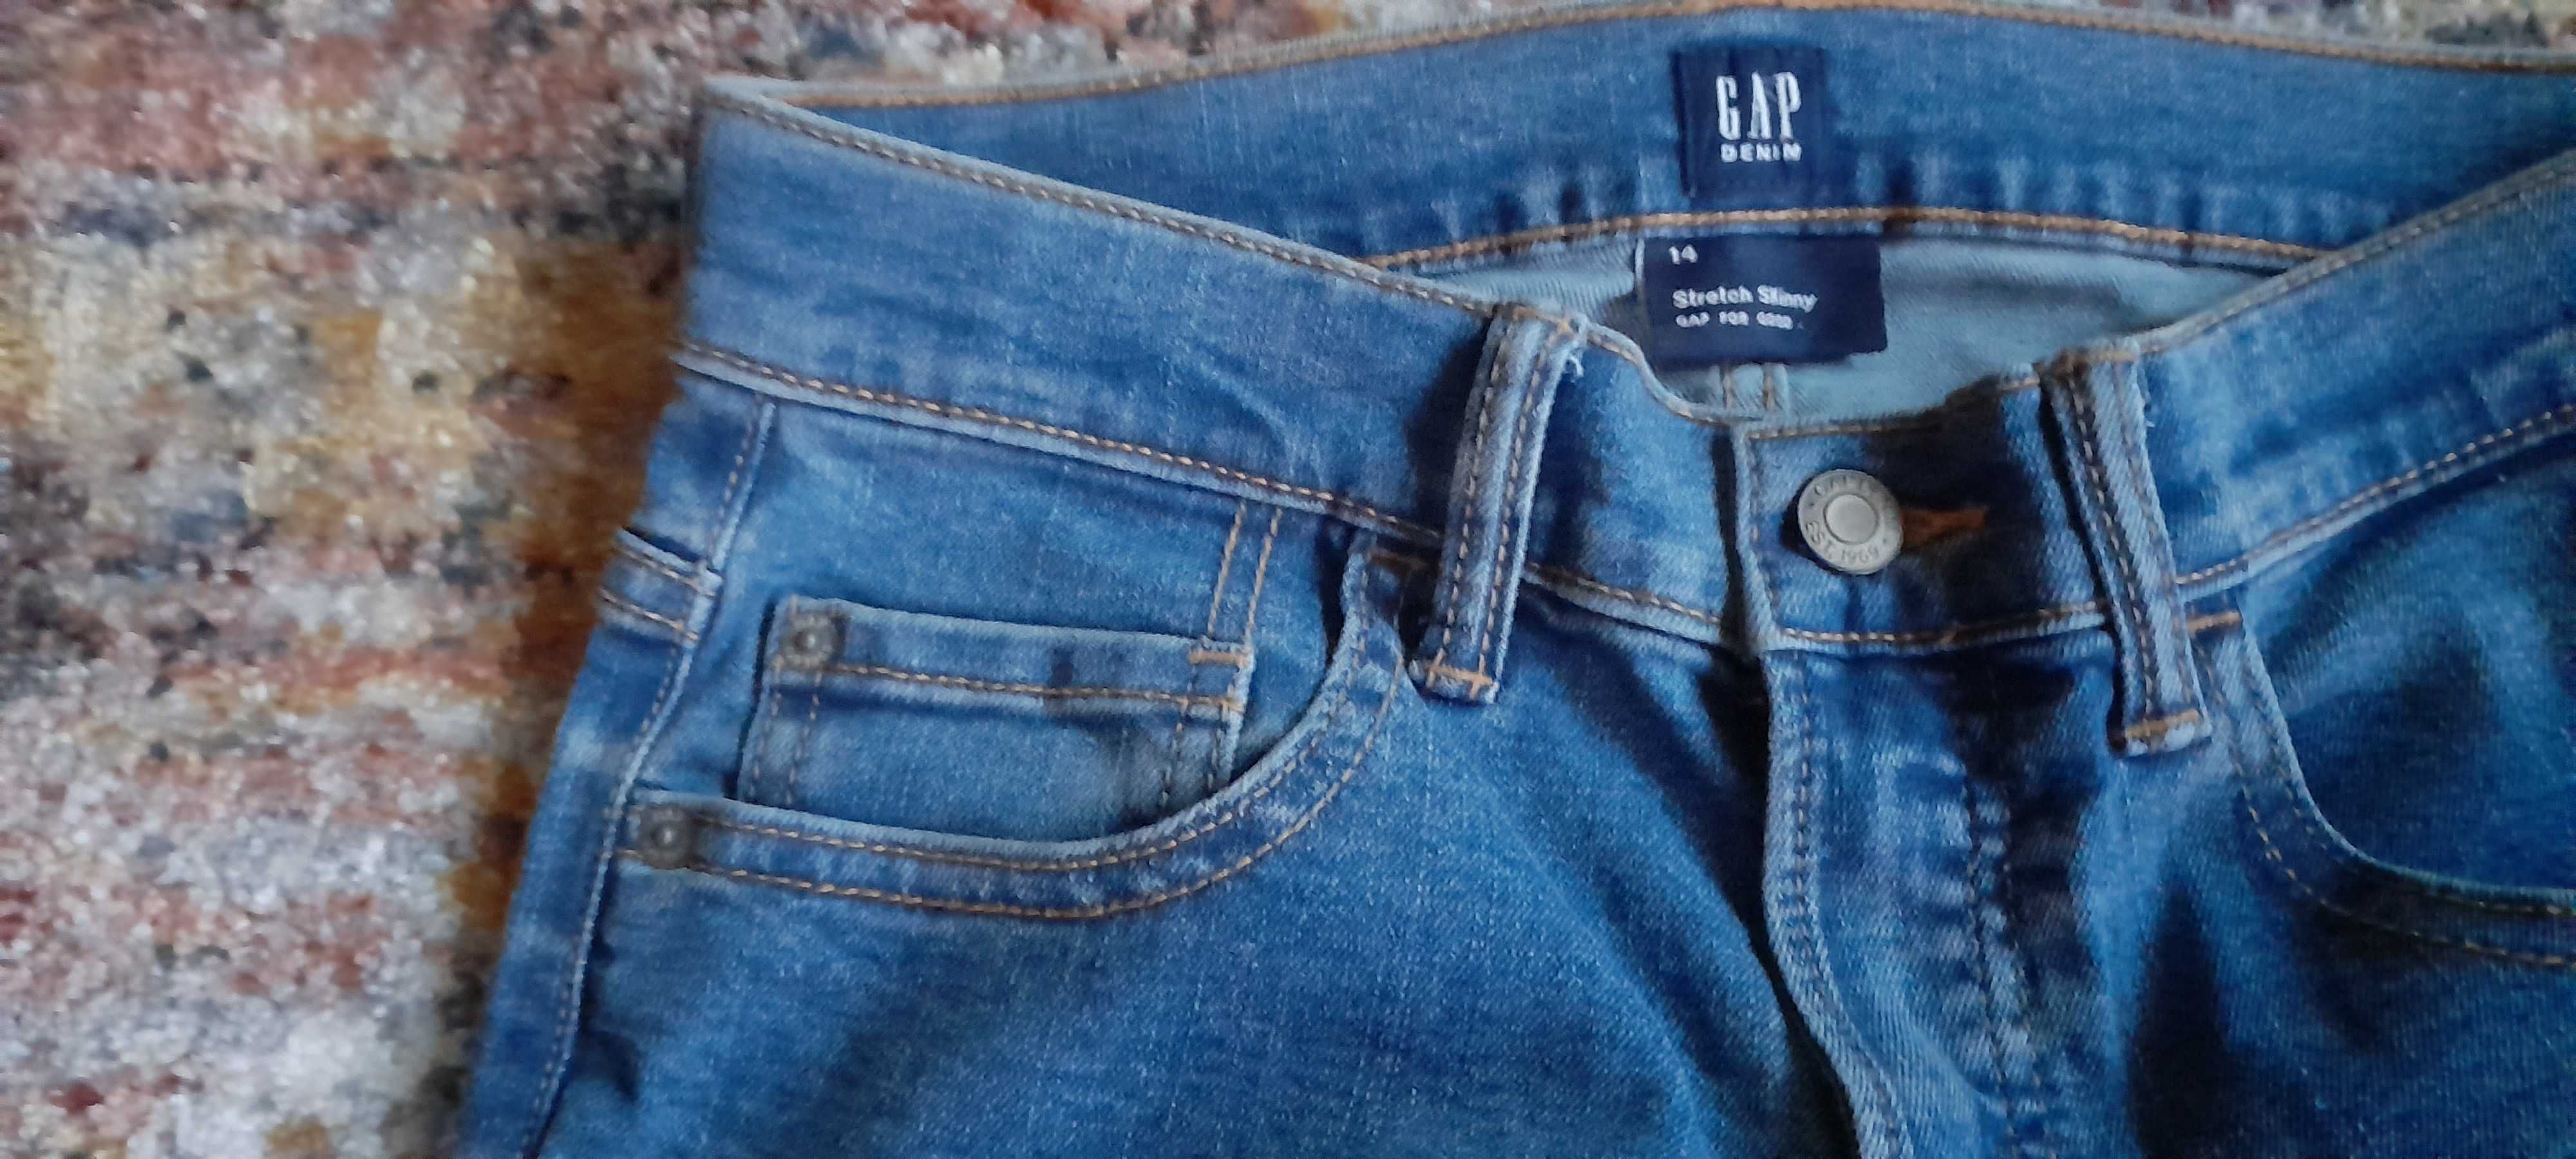 Spodnie jeansy Gap Stretch Skinny nowe